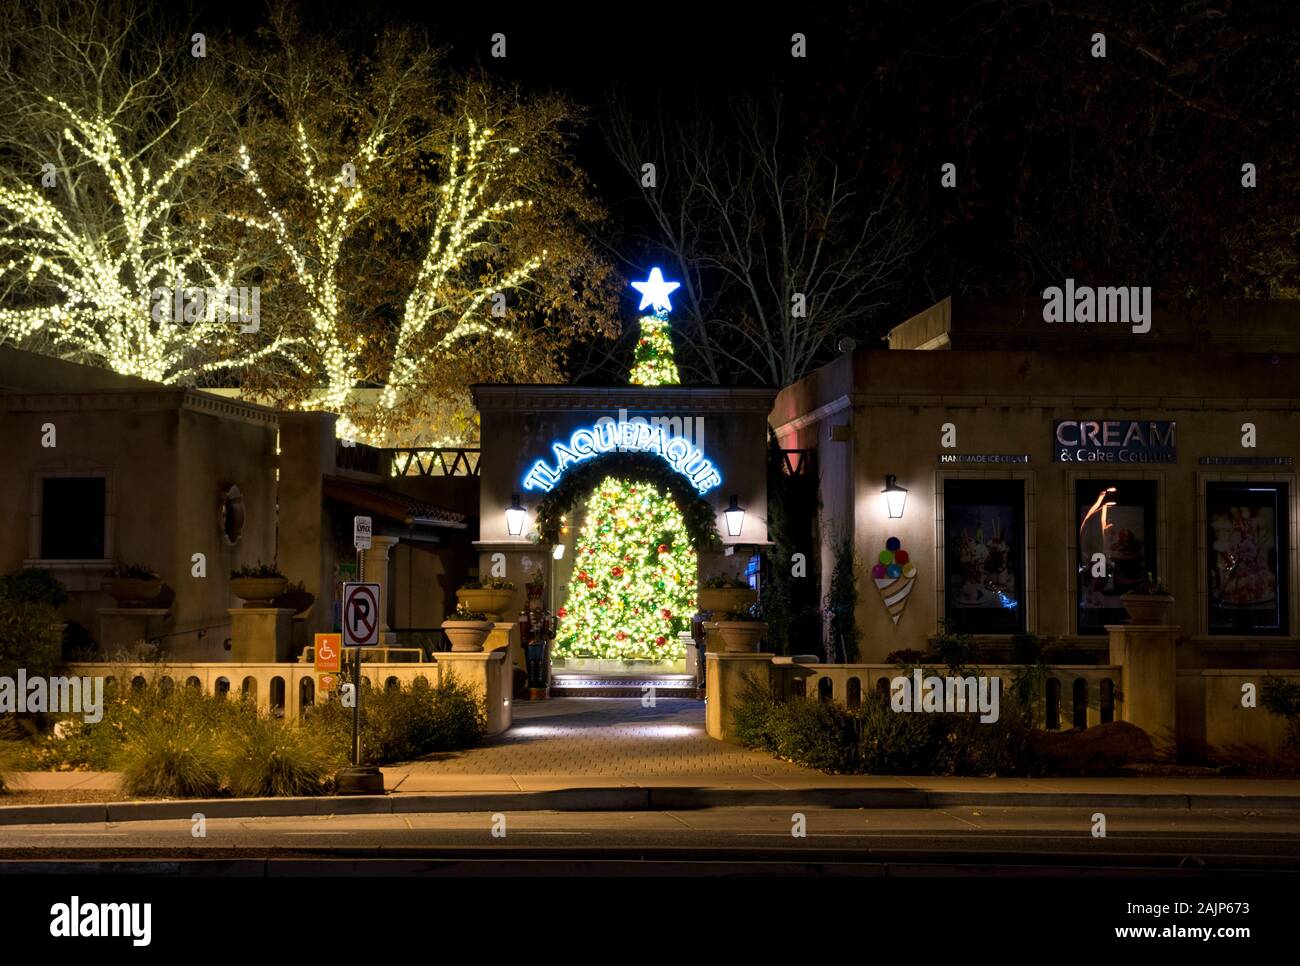 Illuminated trees and Christmas tree at Tlaquepaque North shopping village in Sedona Arizona at night. Stock Photo